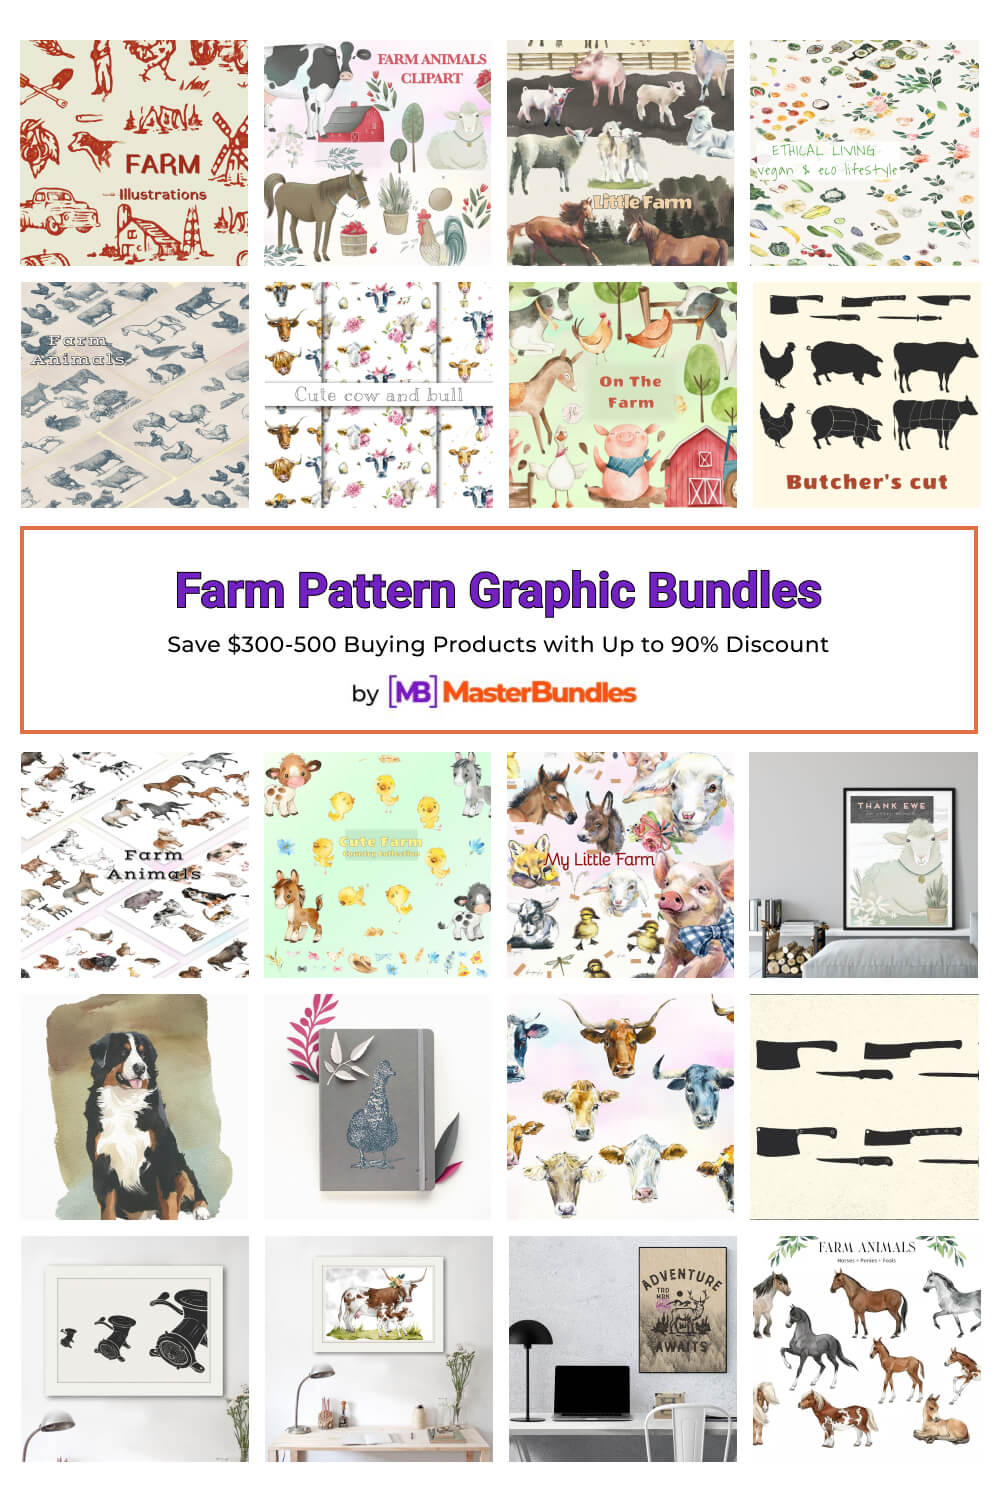 farm pattern graphic bundles pinterest image.